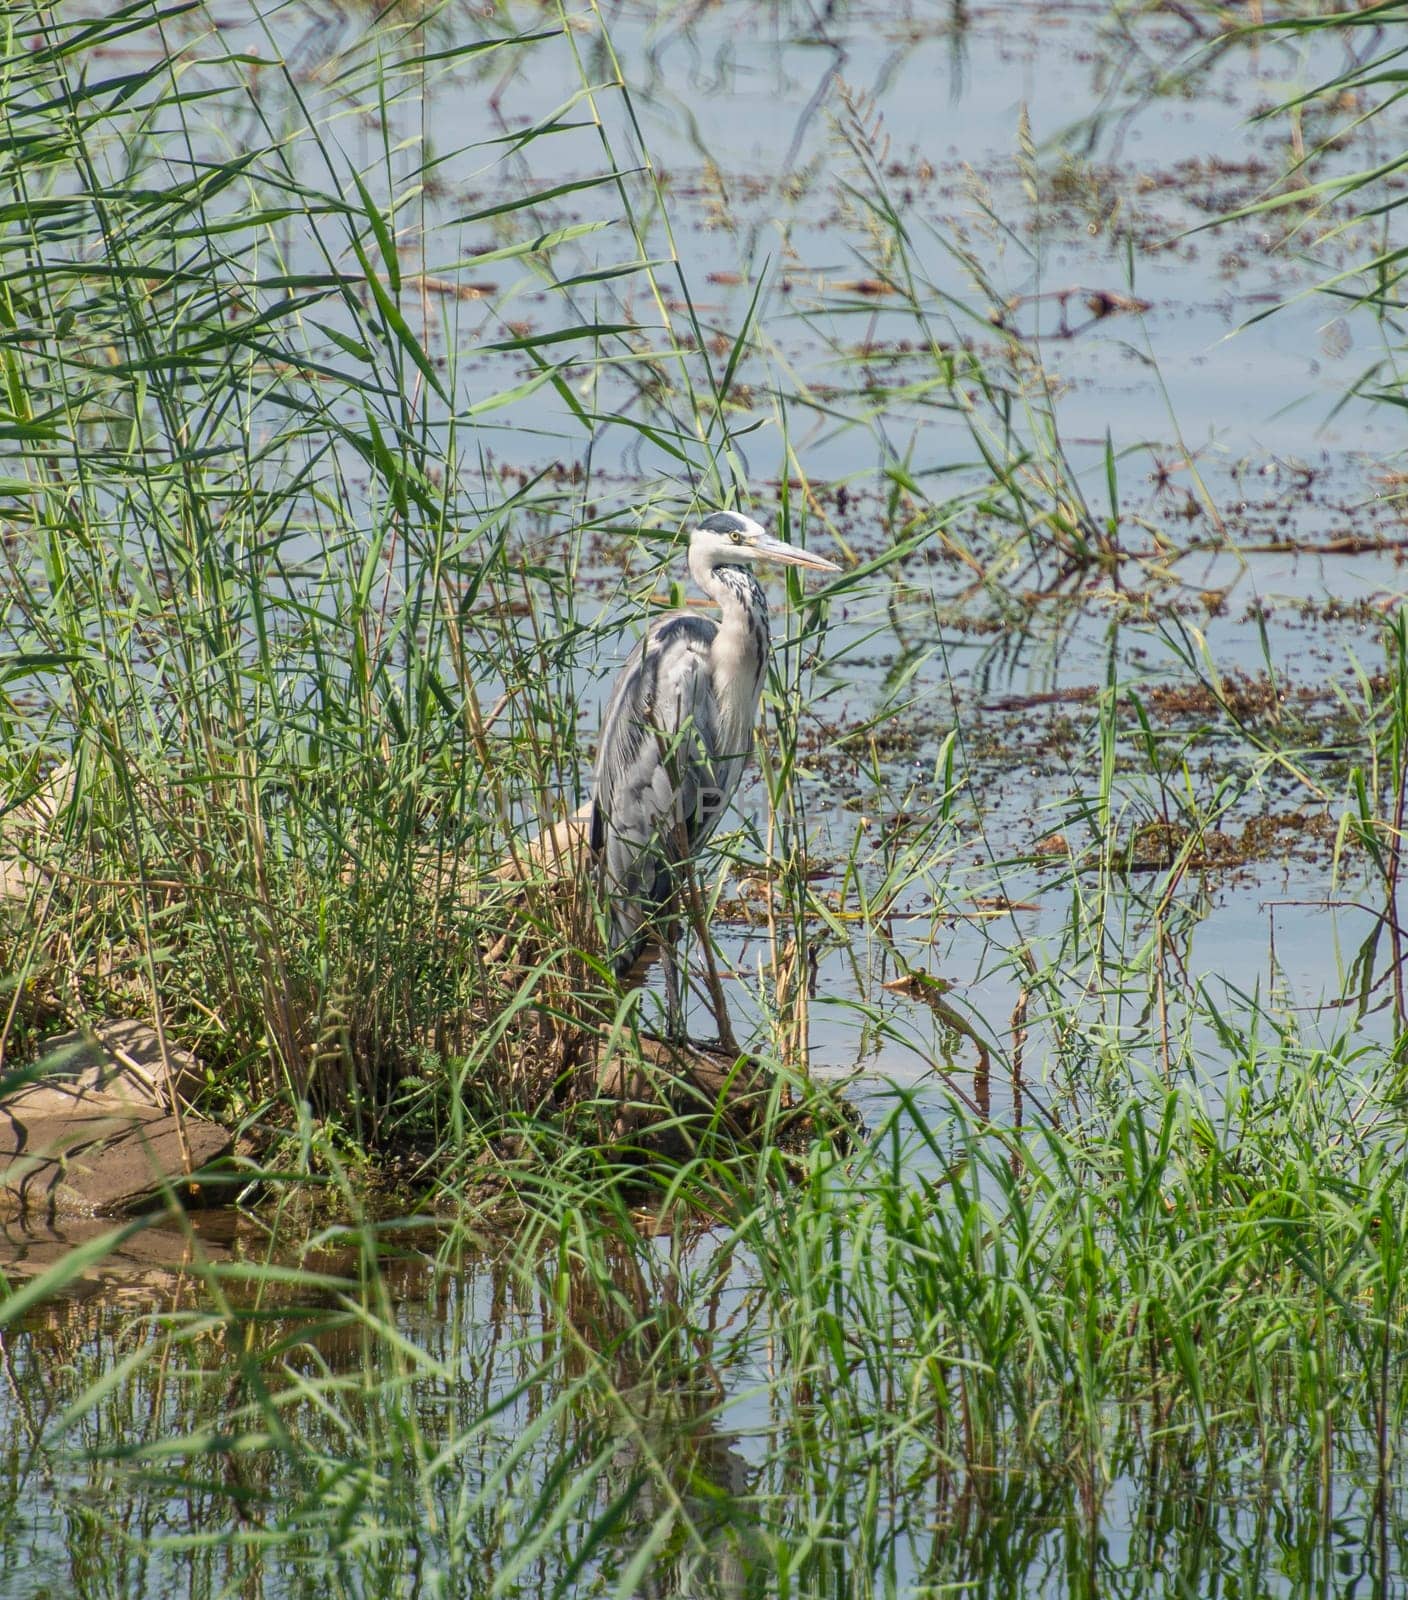 Grey heron stood in grass reeds by river bank by paulvinten